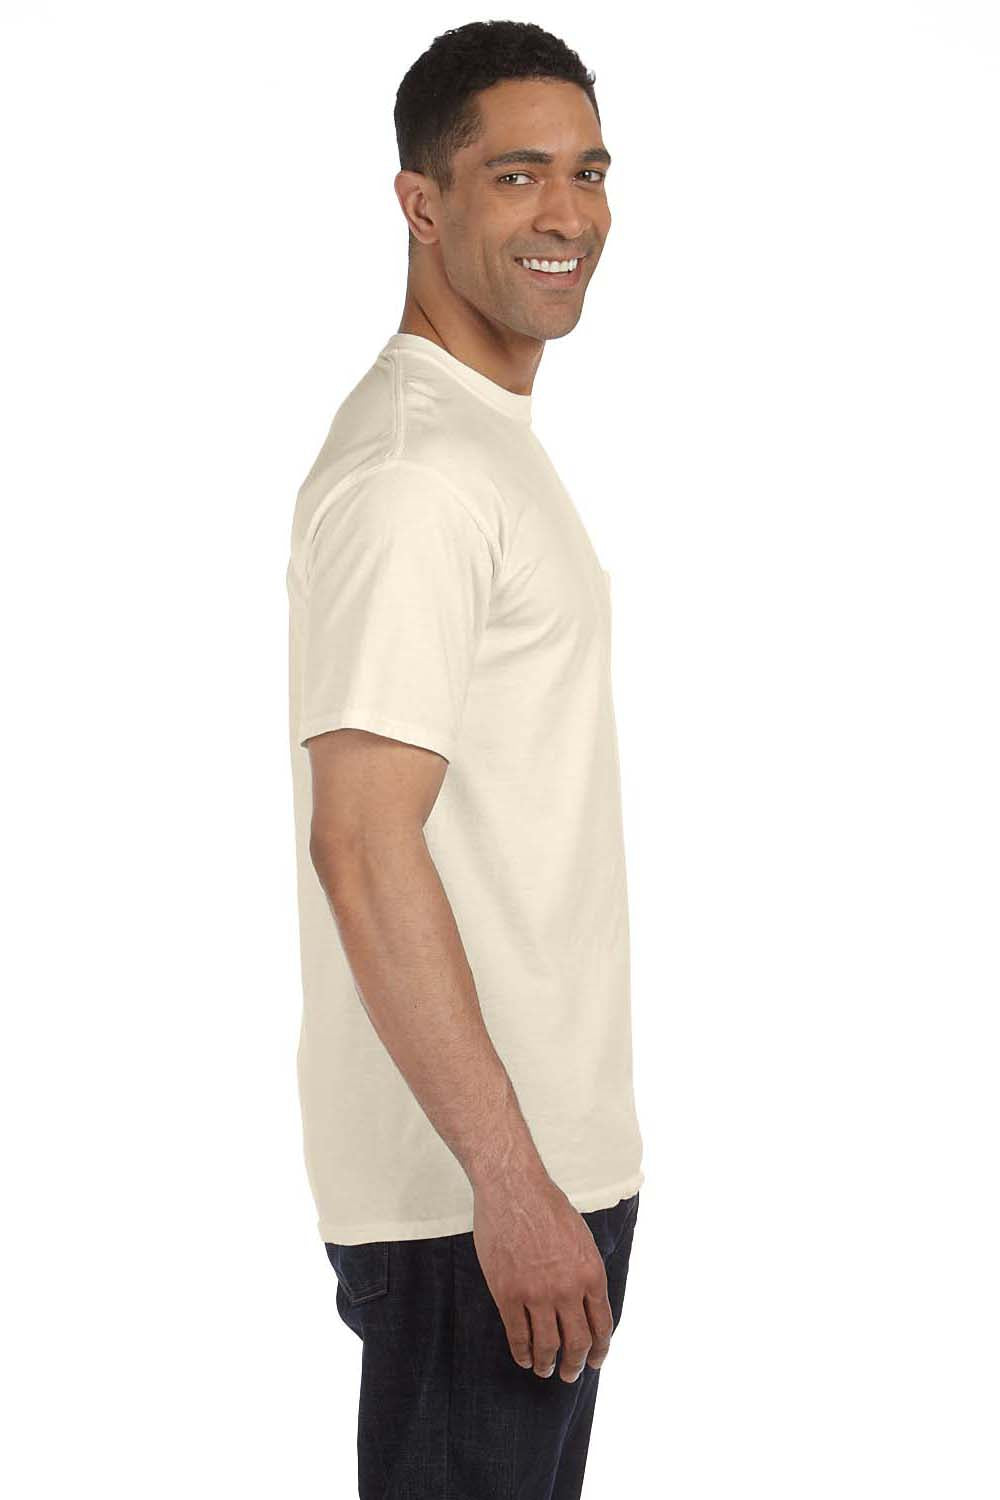 Comfort Colors 6030CC Mens Short Sleeve Crewneck T-Shirt w/ Pocket Ivory White Side